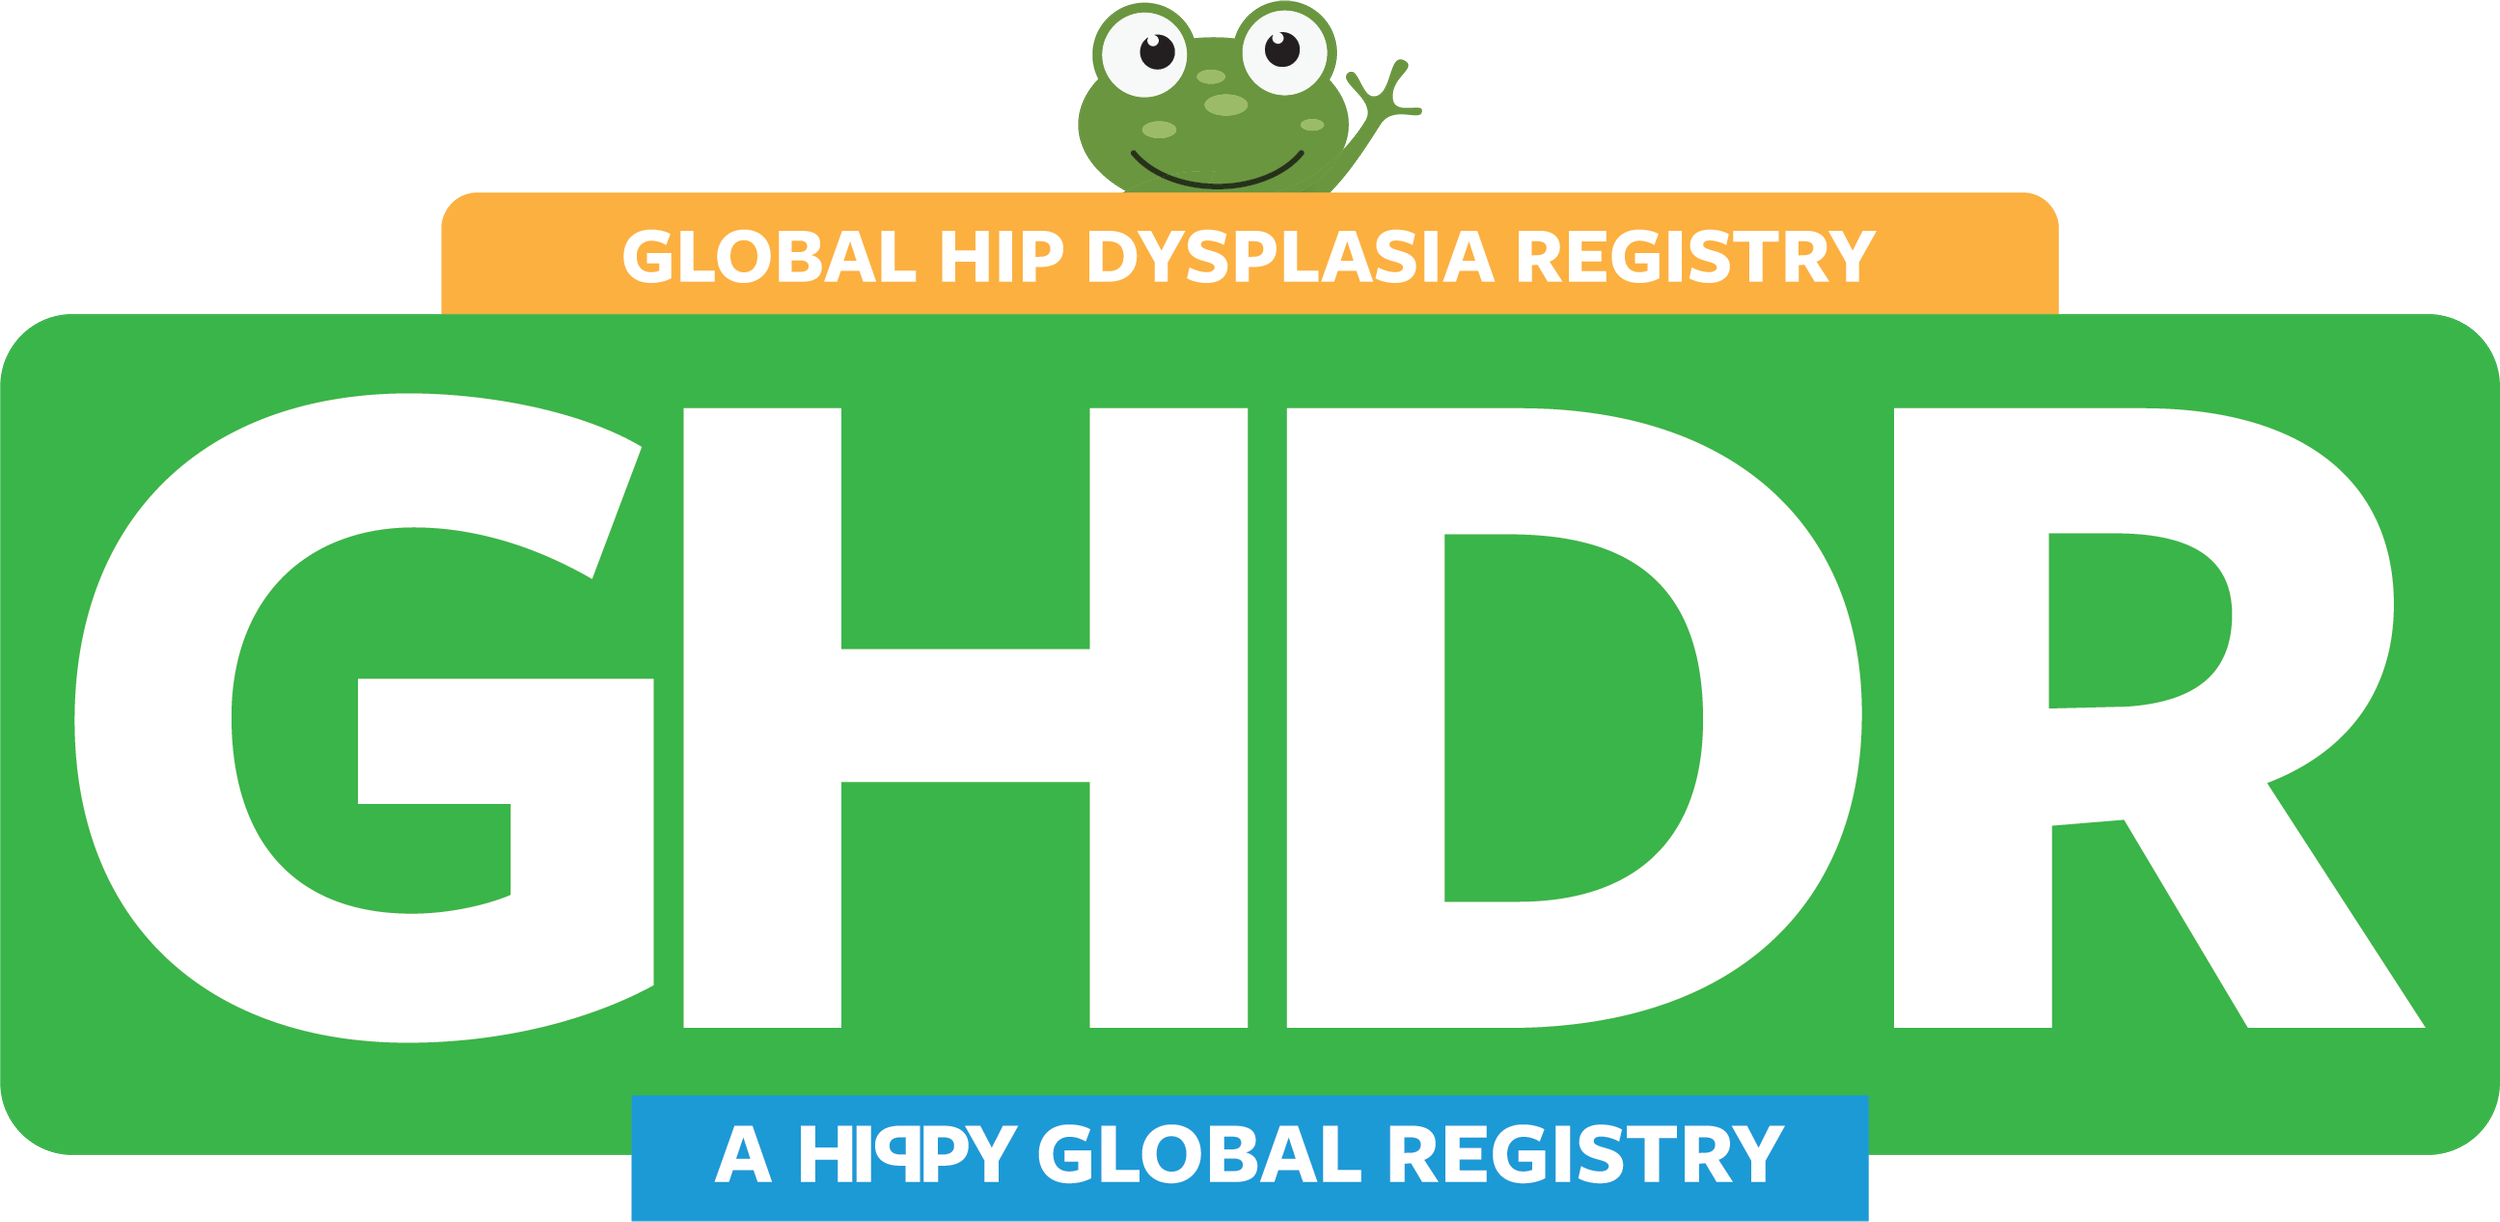 Global Hip Dysplasia Registry (GHDR)